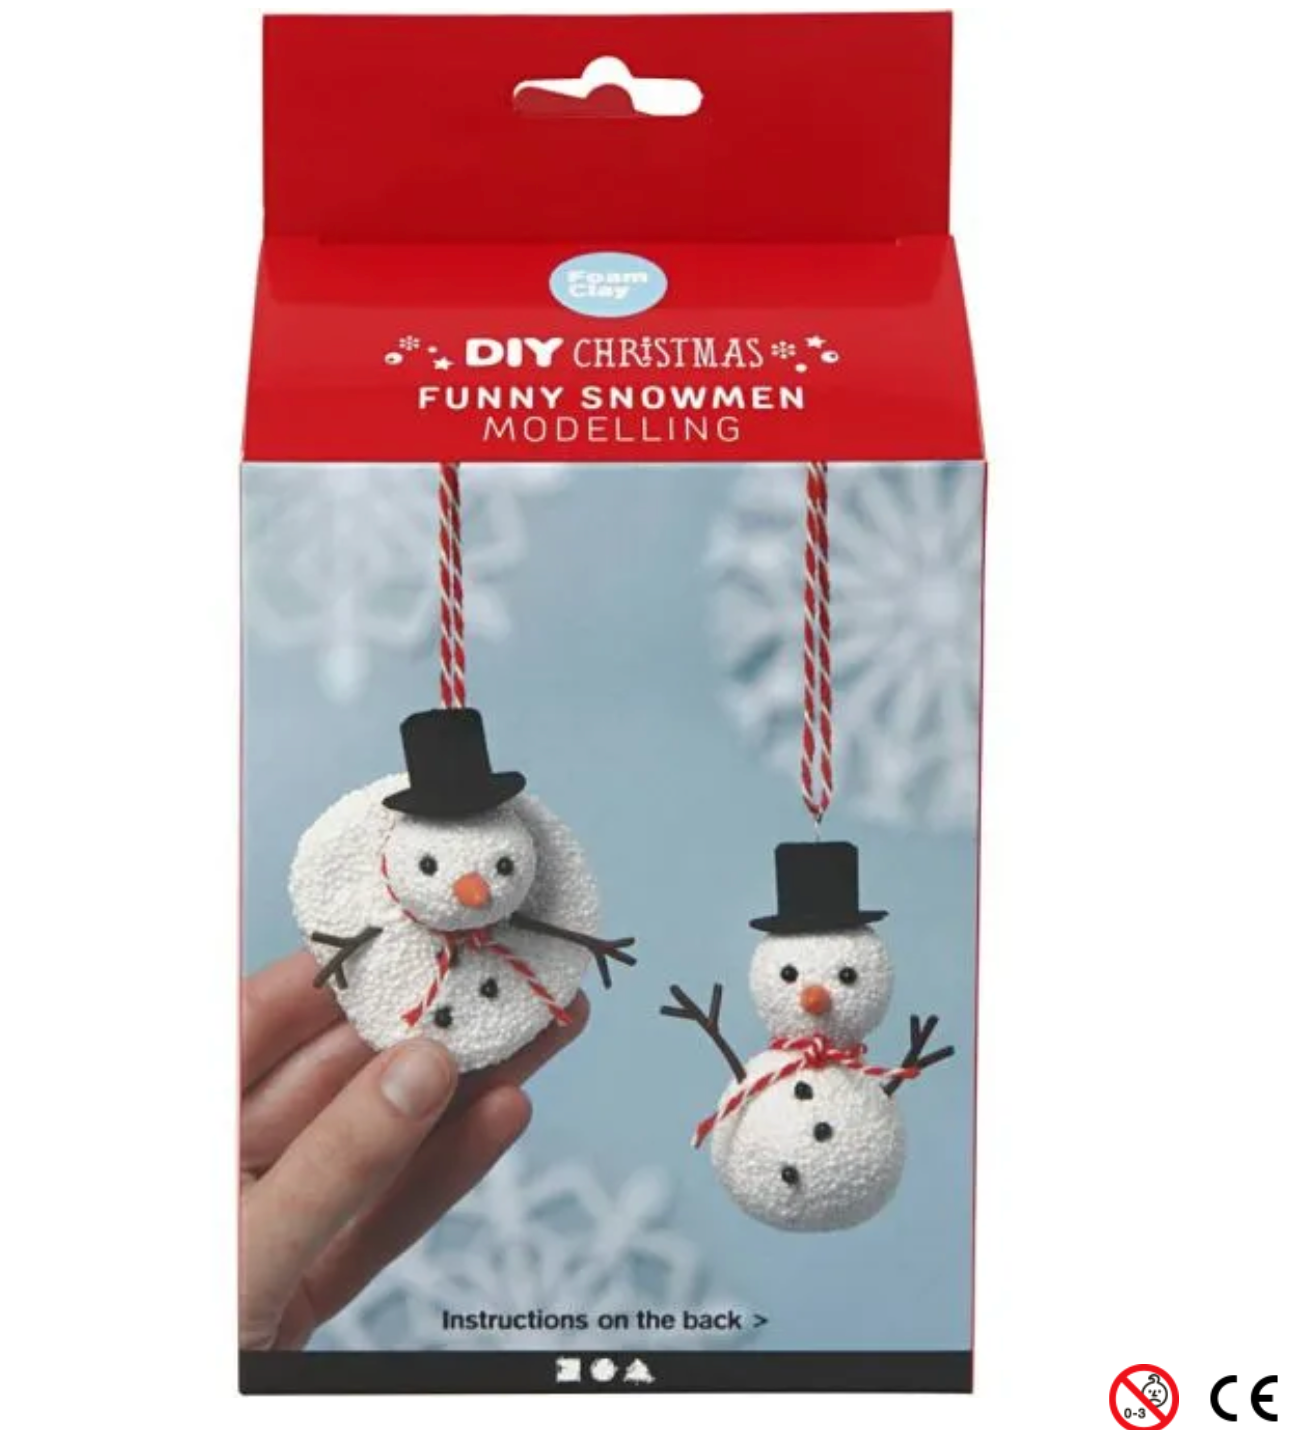 DIY Christmas - Funny Snowmen